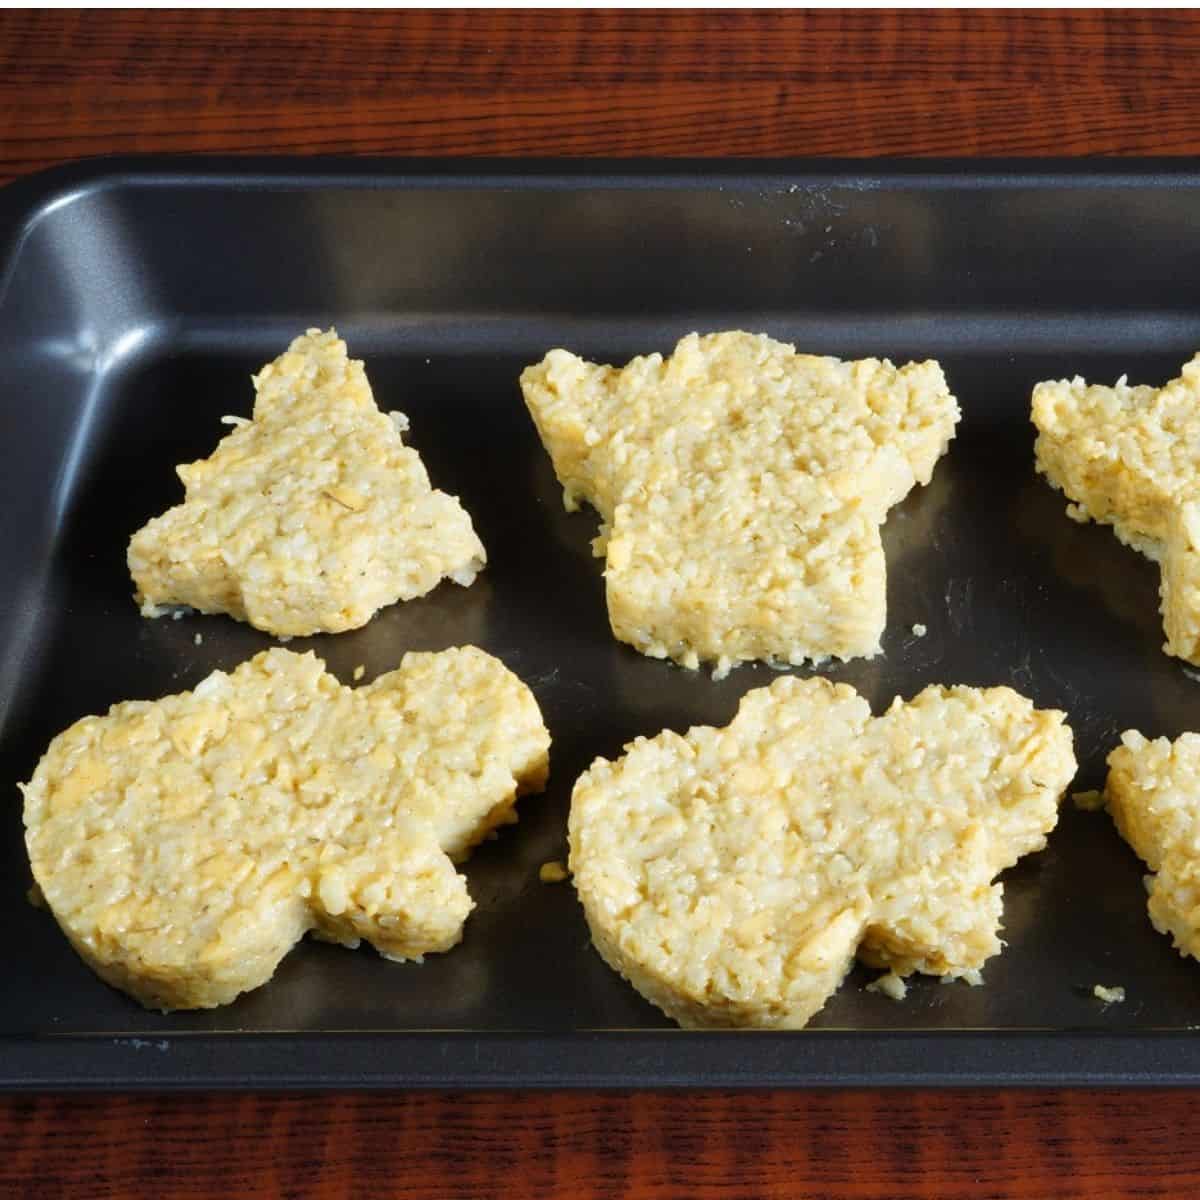 shaped cauliflower crusts on baking pan.